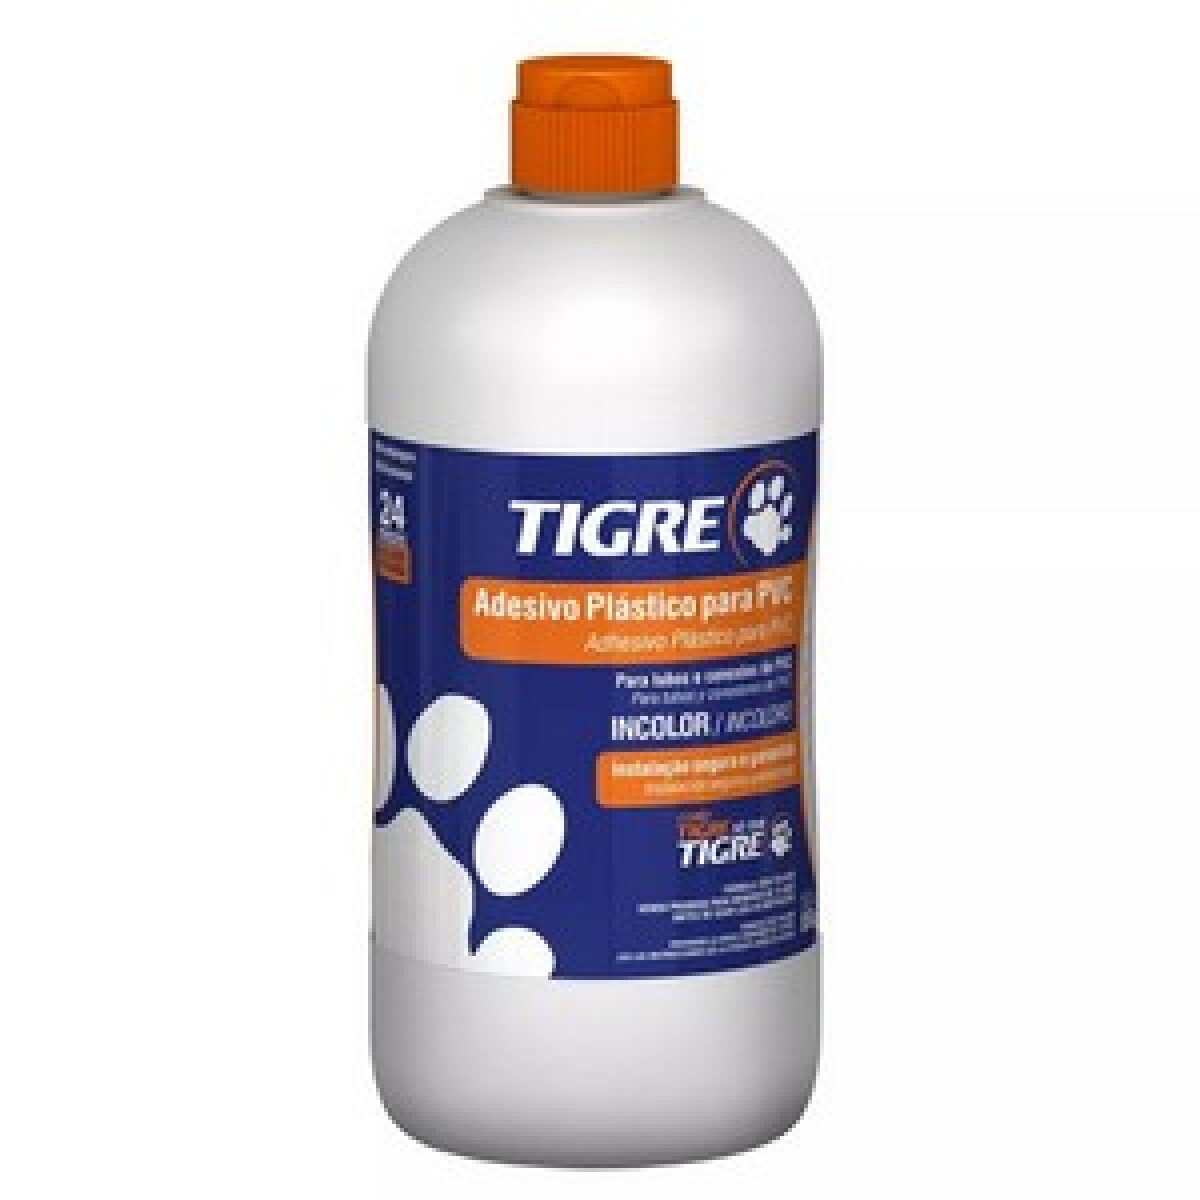 Cemento adhesivo 850 g Tigre 